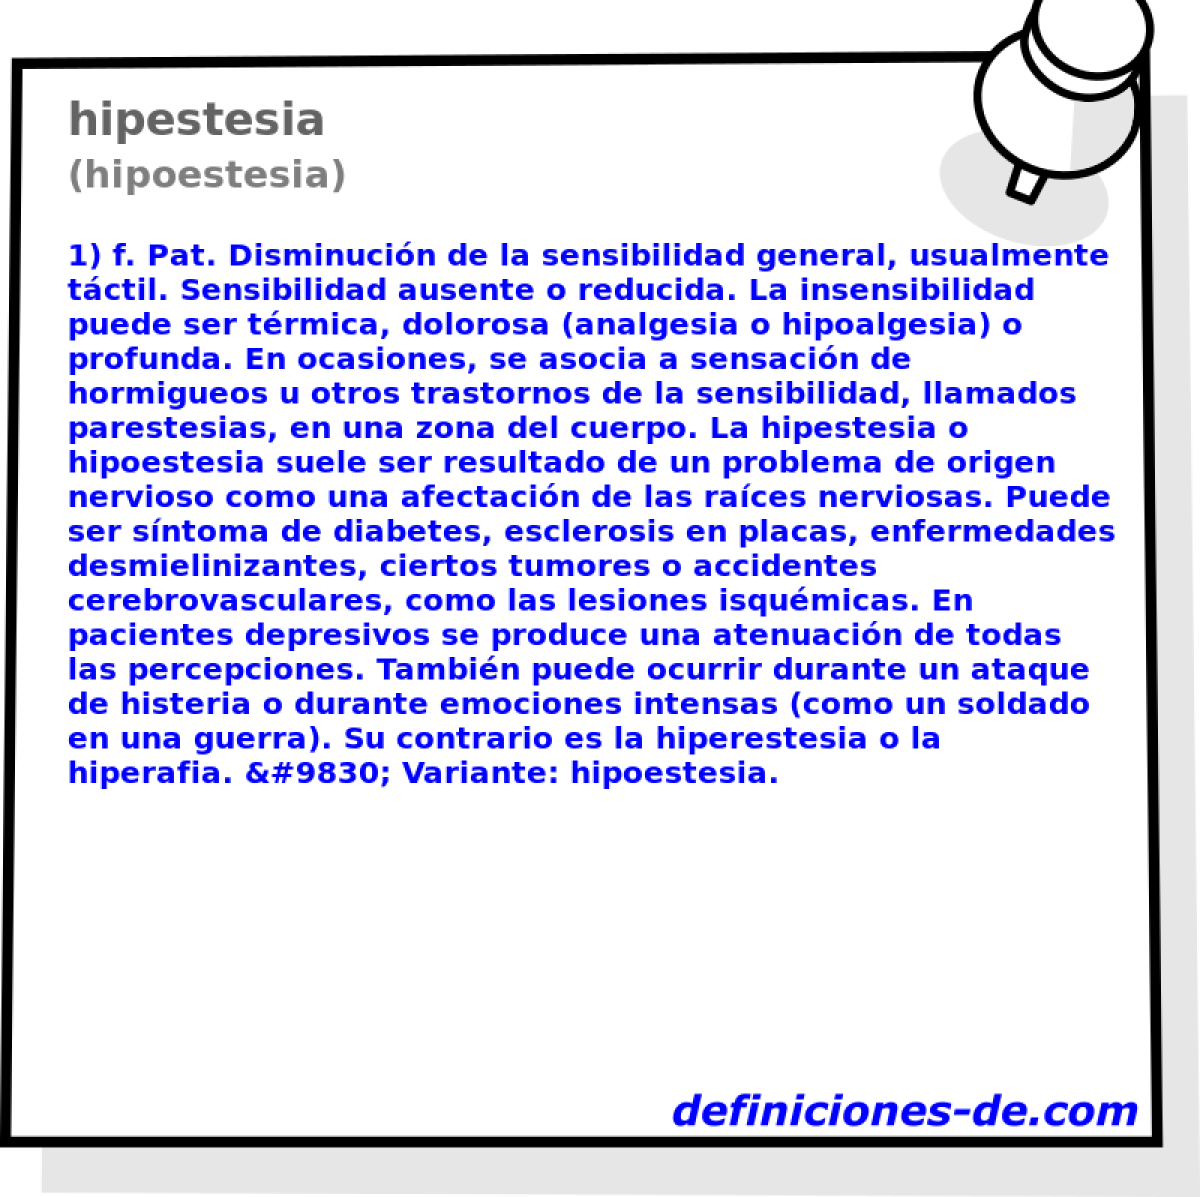 hipestesia (hipoestesia)